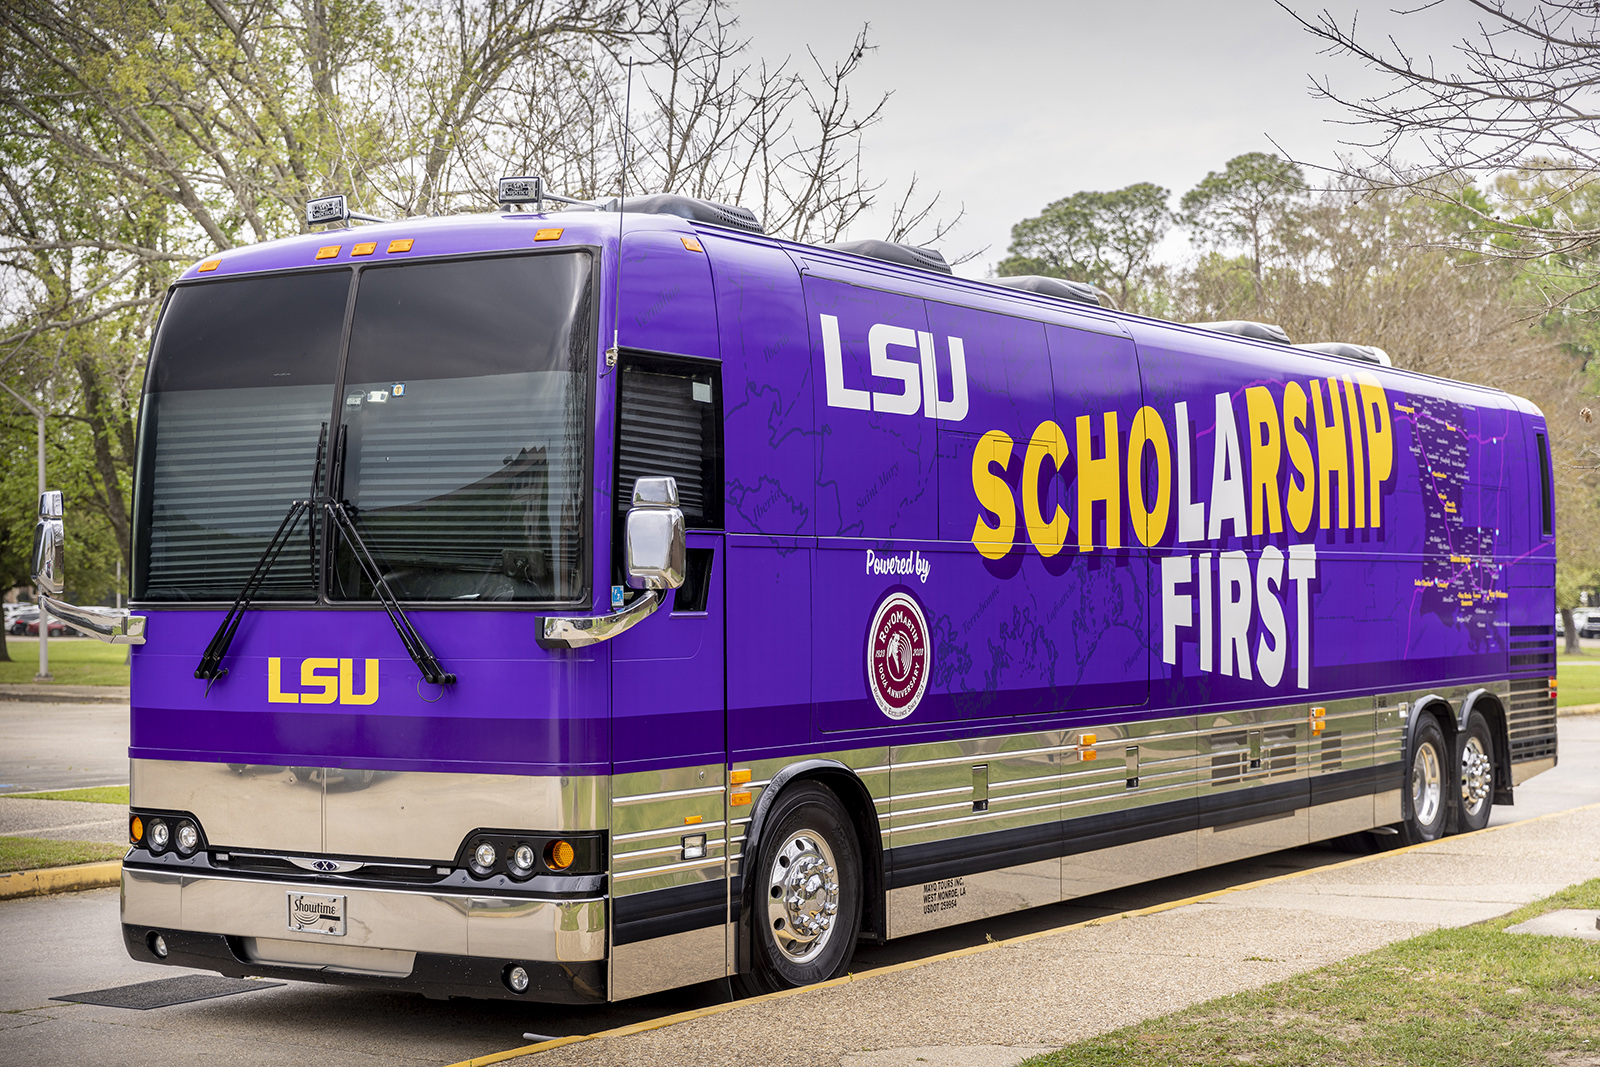 LSU Scholarship First tour bus parked on compus